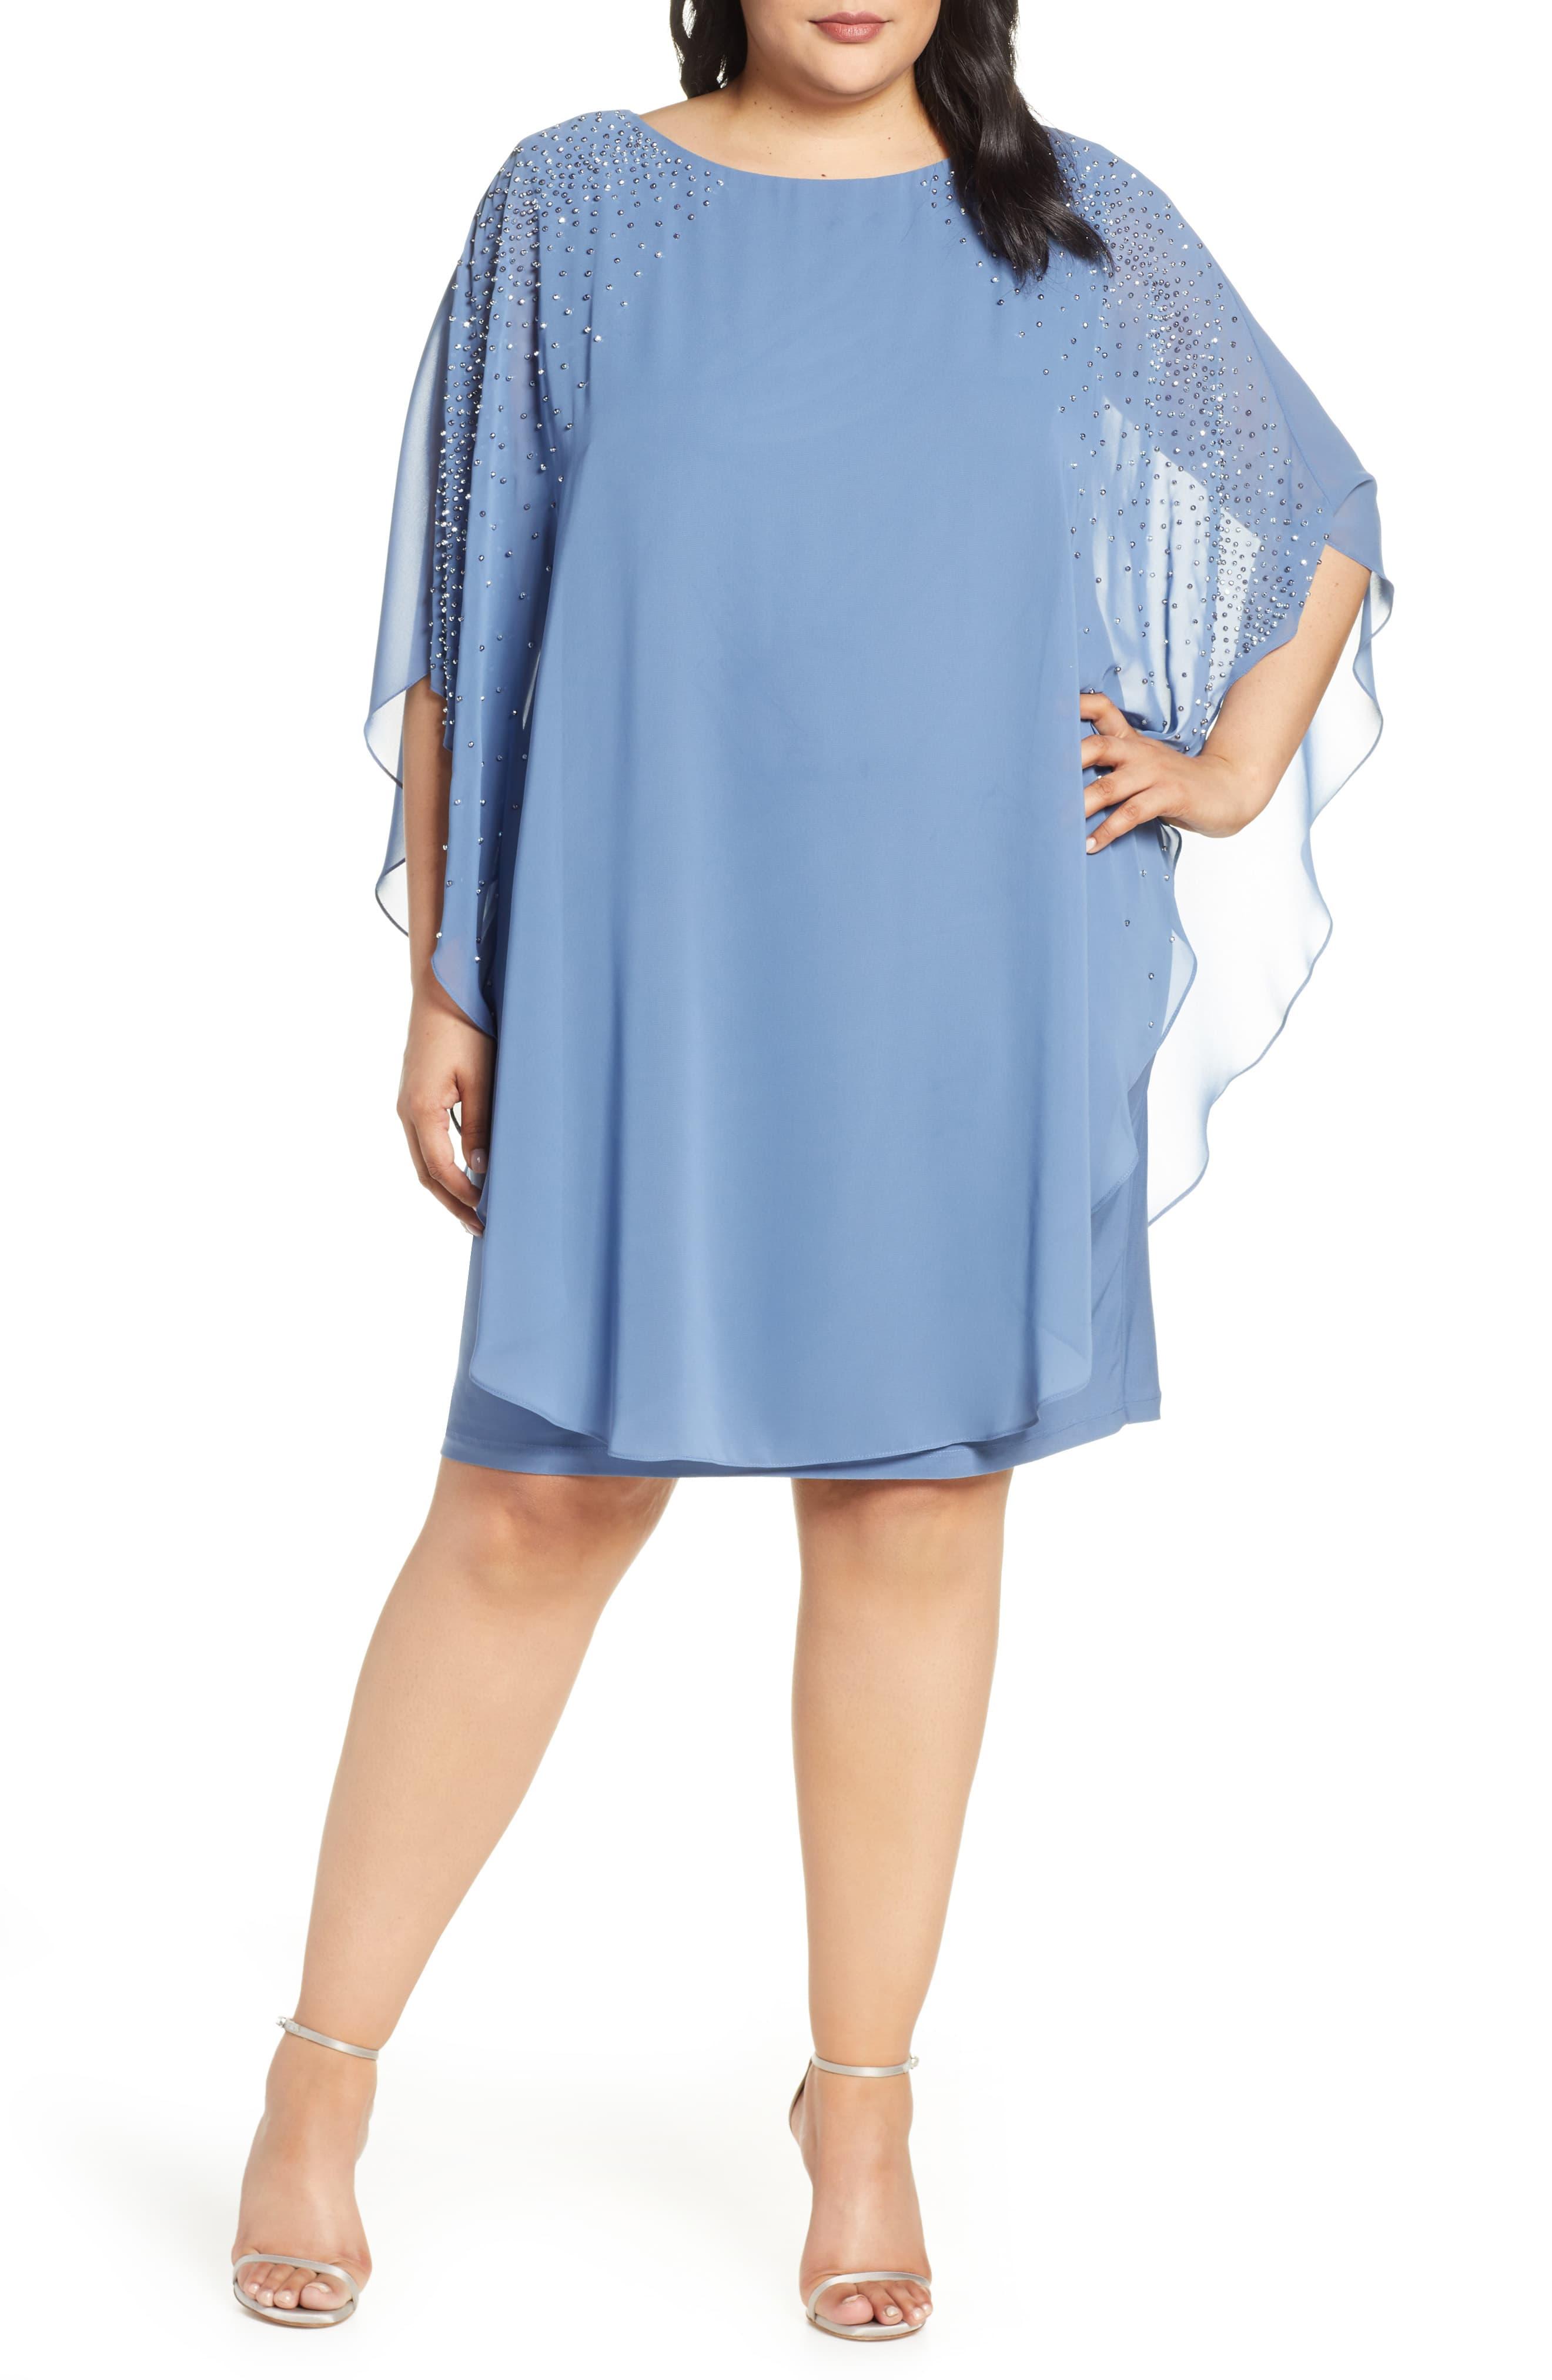 Xscape Beaded Chiffon Overlay Dress in Periwinkle (Blue) - Lyst